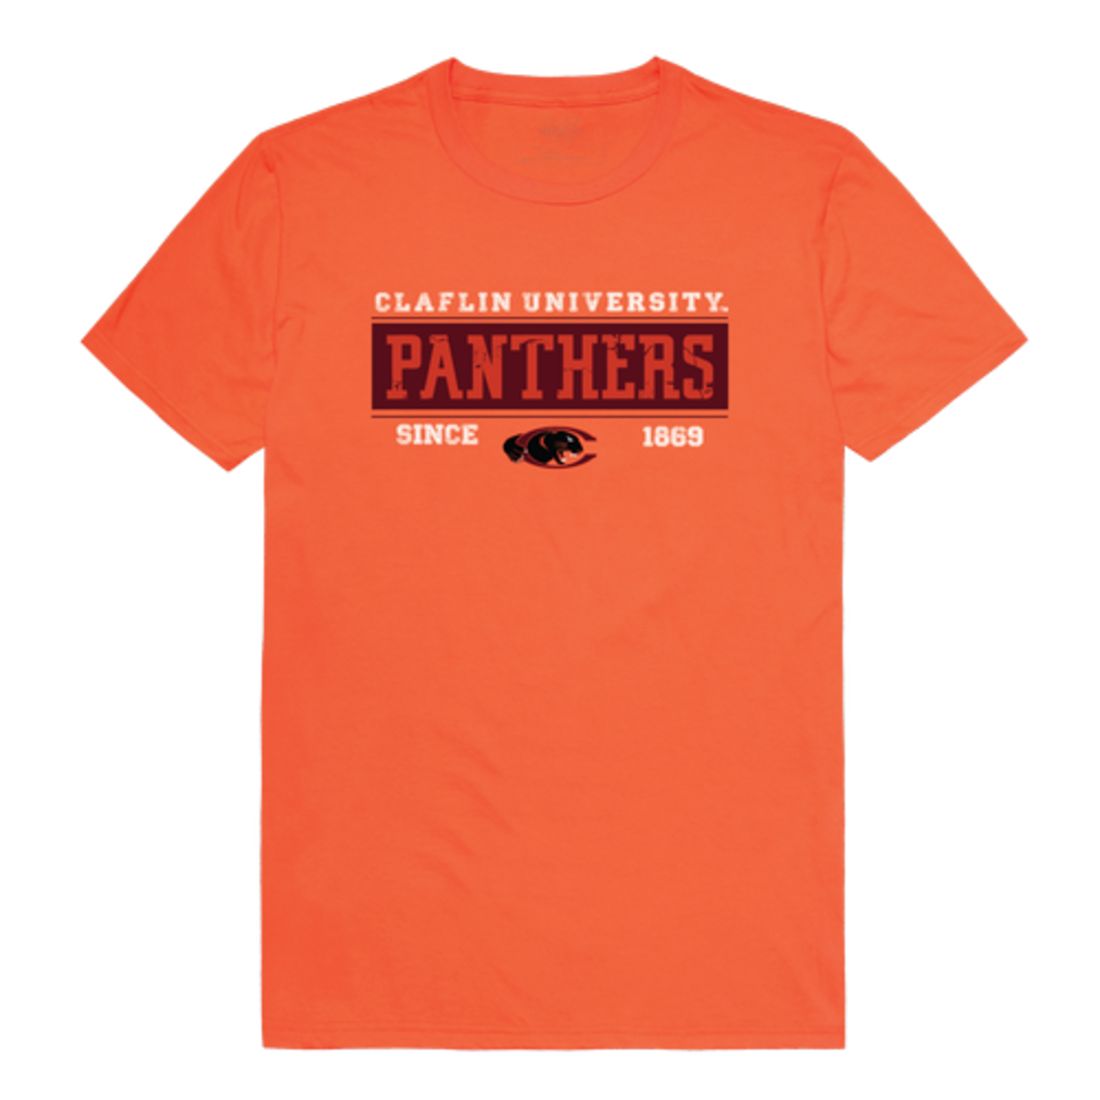 Claflin University Panthers Established T-Shirt Tee